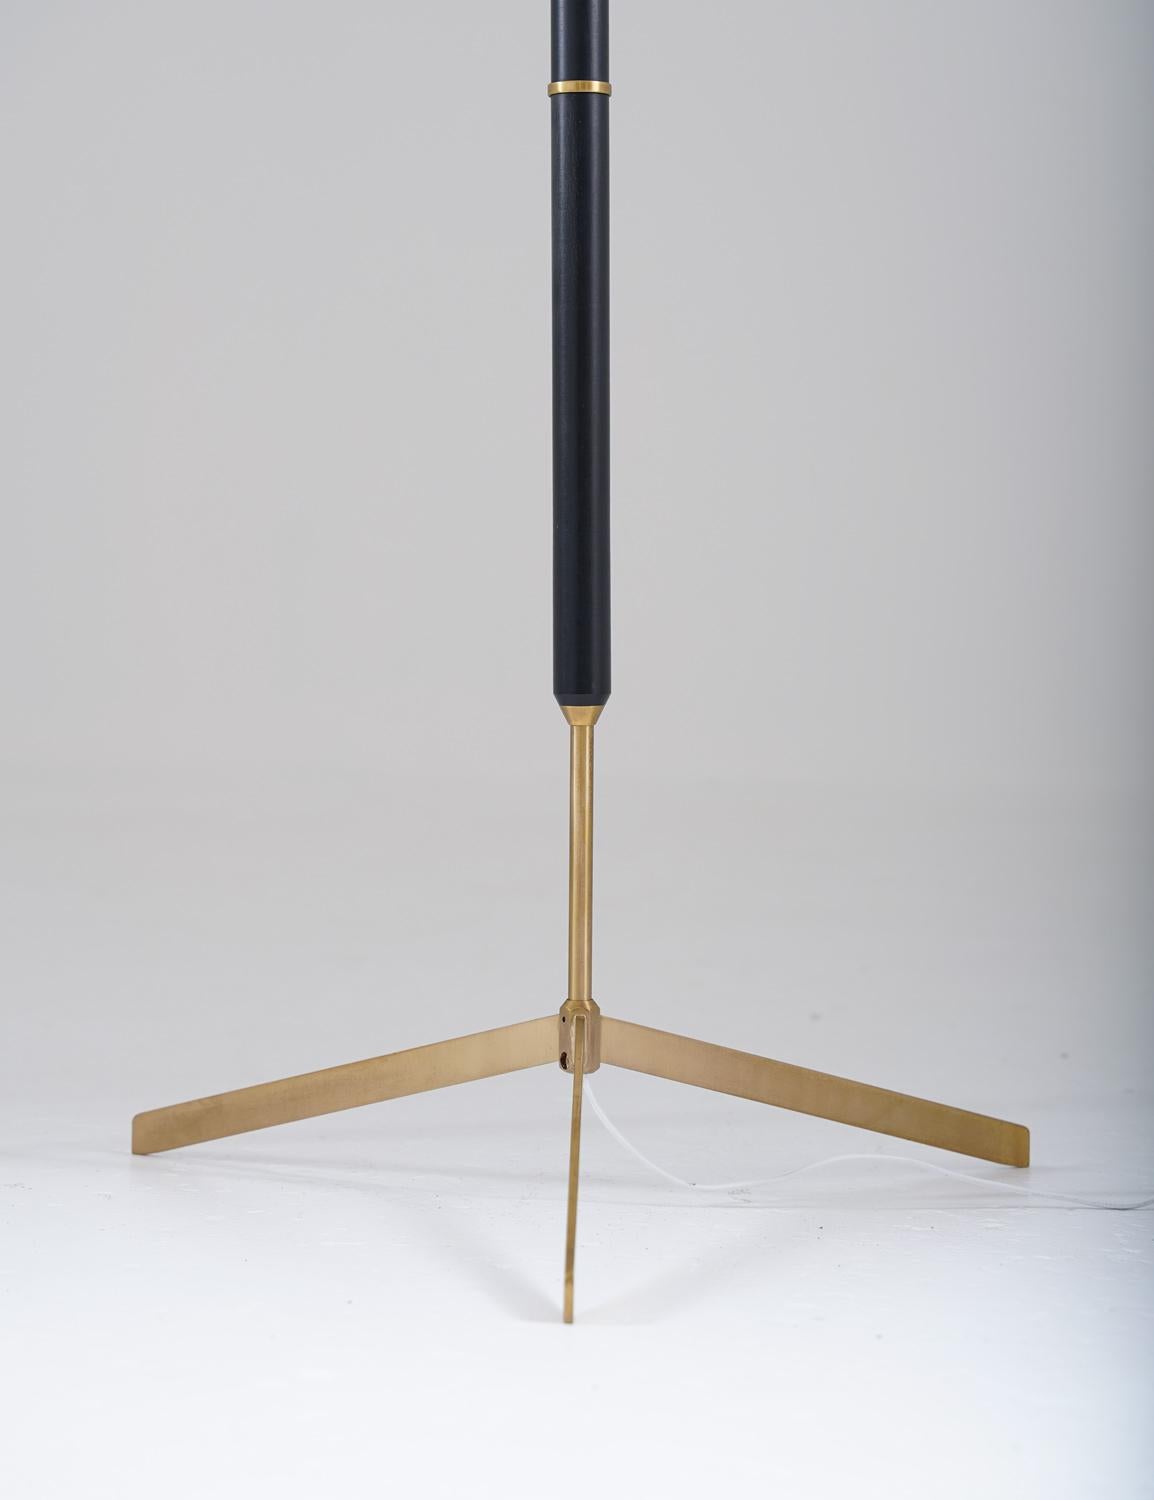 20th Century Scandinavian Midcentury Floor Lamps in Brass and Wood by Bergboms, Sweden